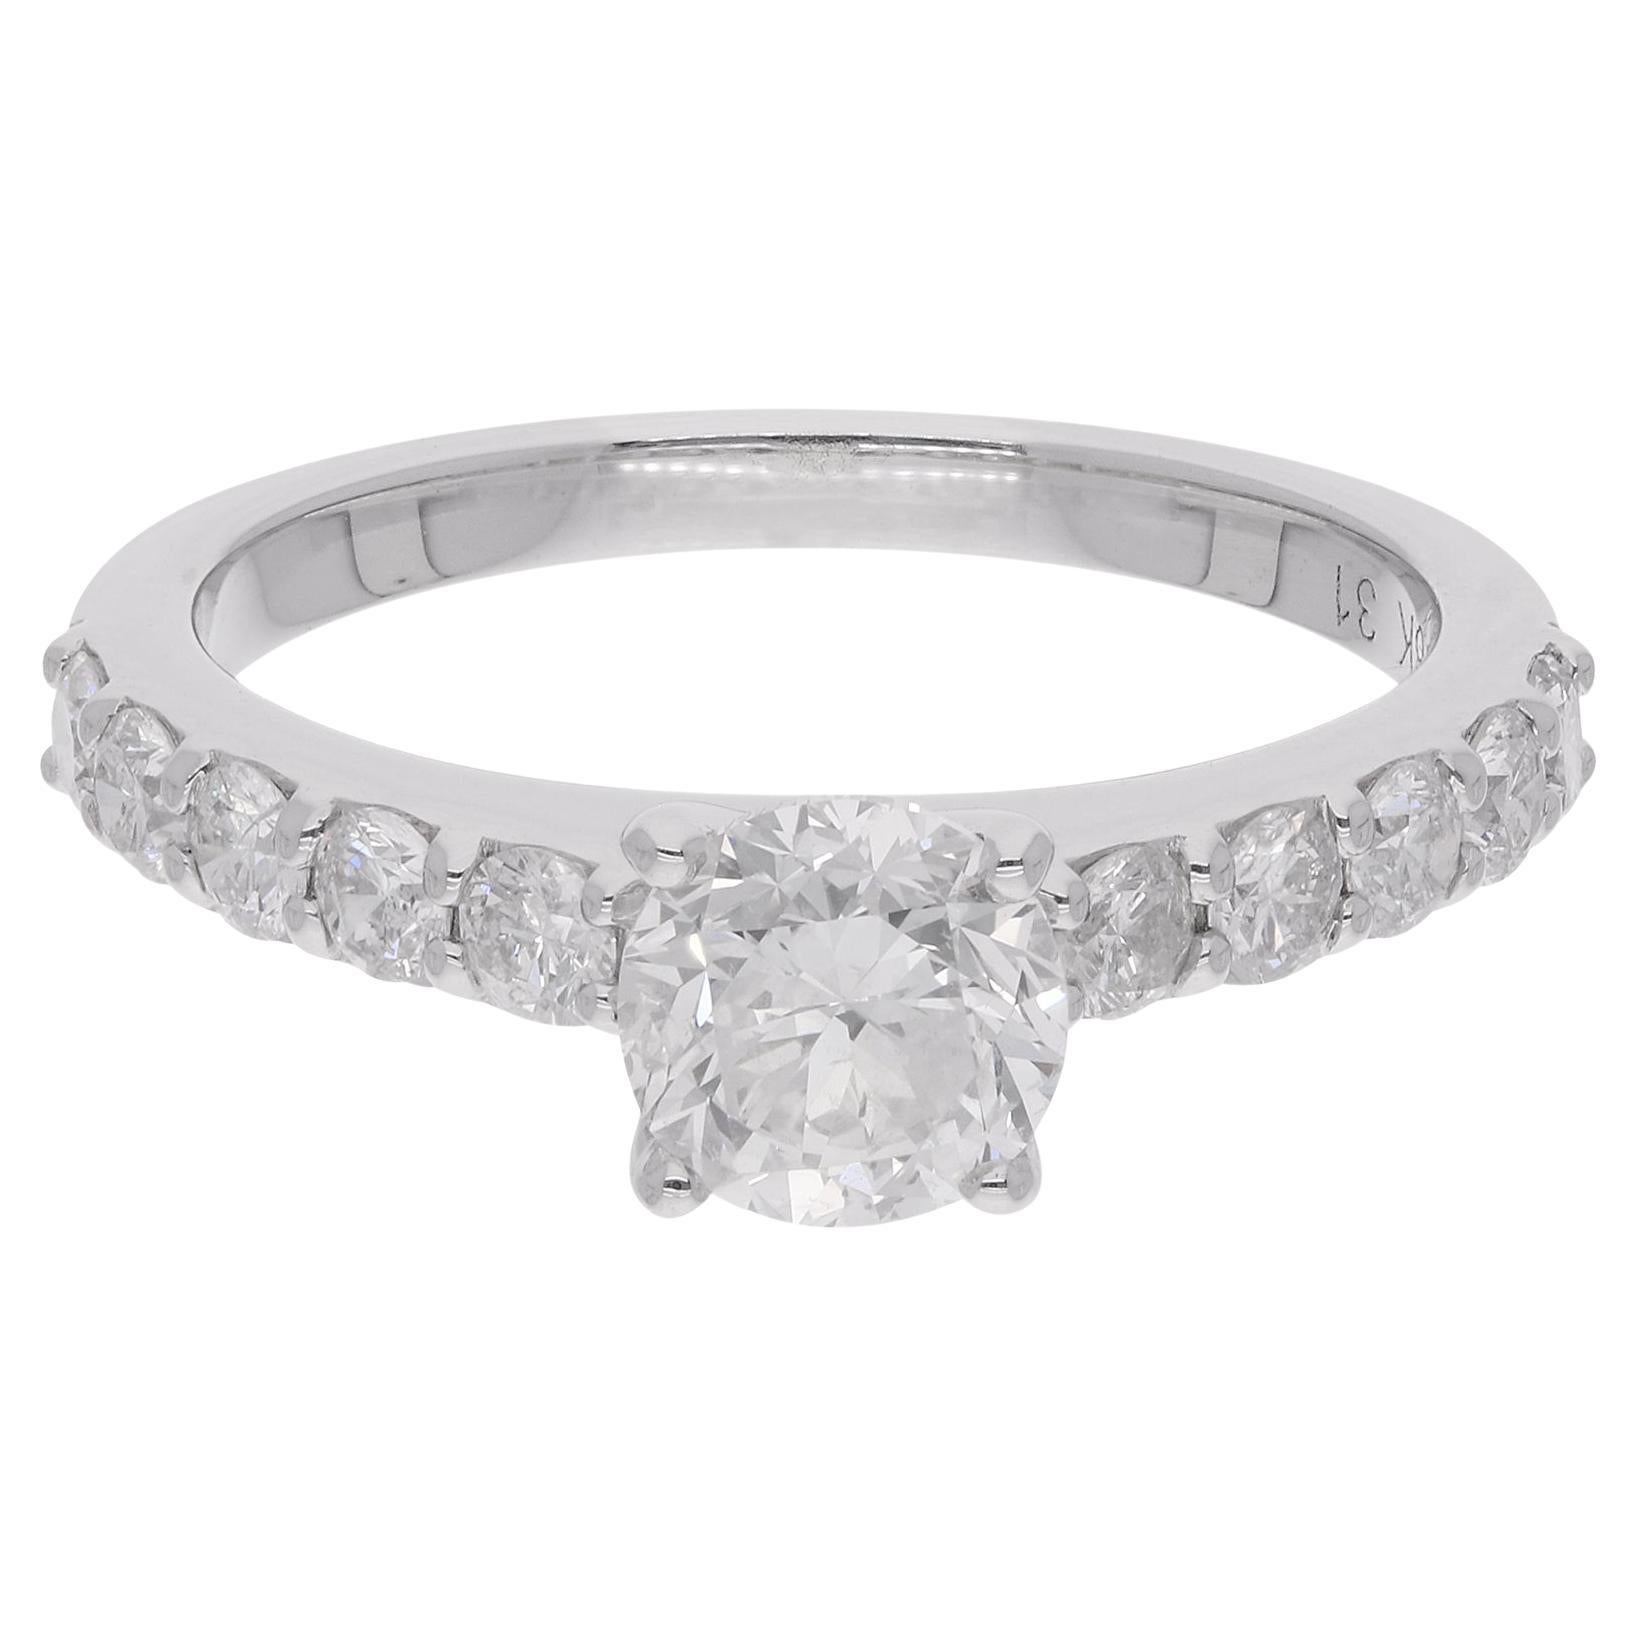 Real 1.13 Carat Solitaire Diamond Ring 18 Karat White Gold Handmade Fine Jewelry